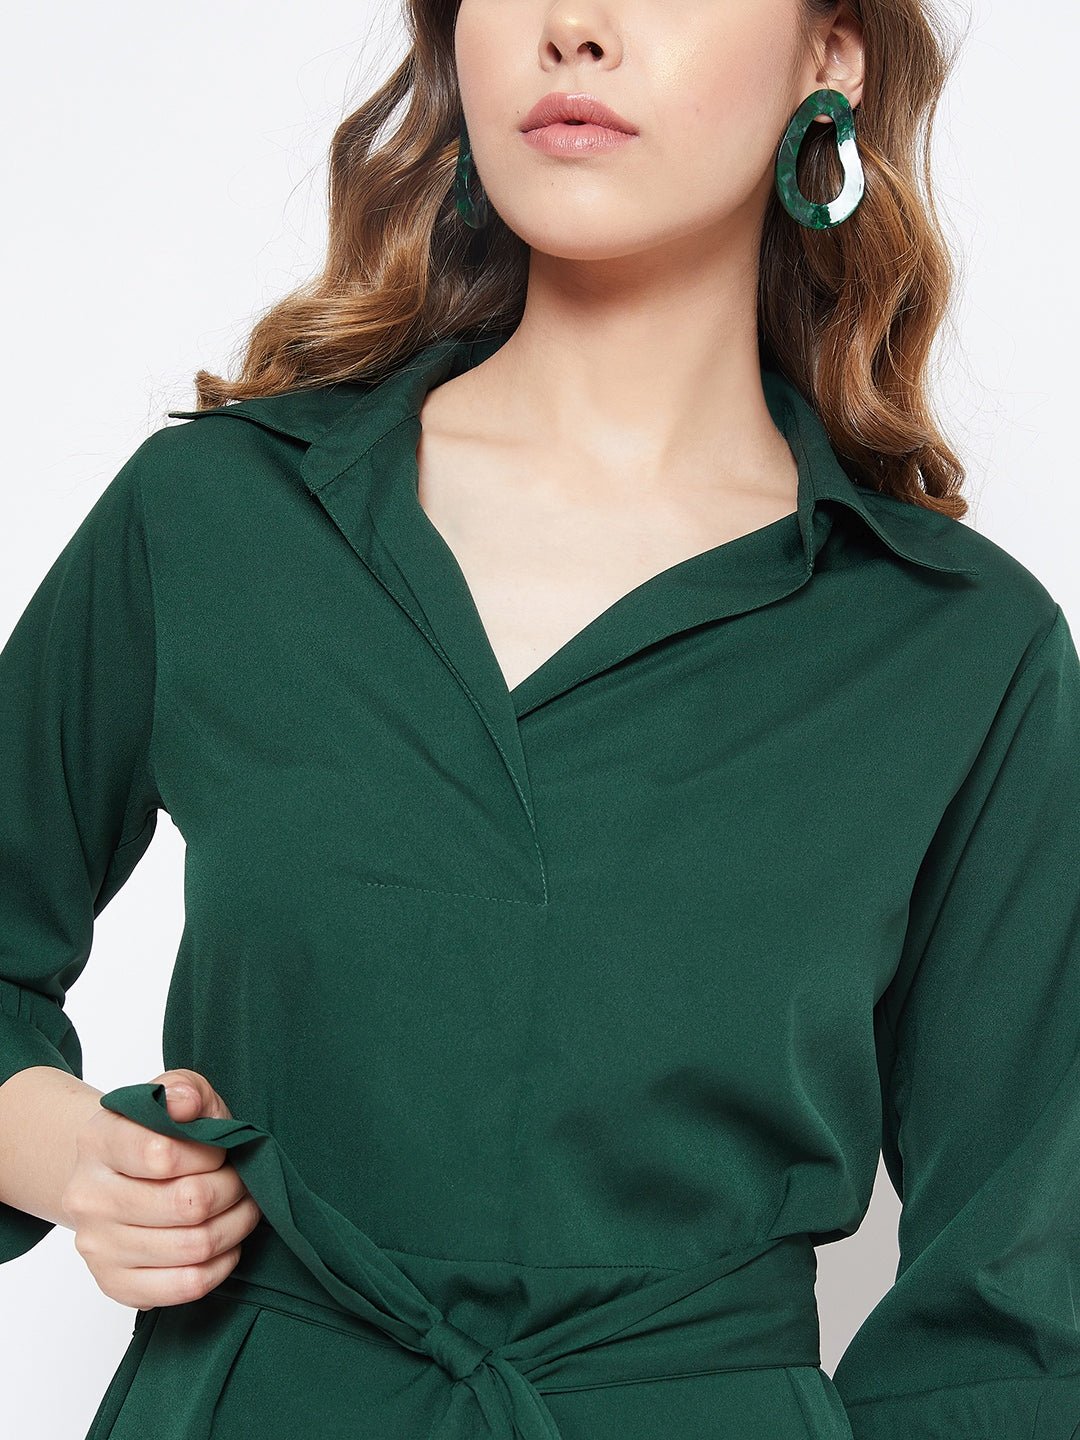 Folk Republic Women Solid Green Shirt Collor Curved Mini Dress - #folk republic#